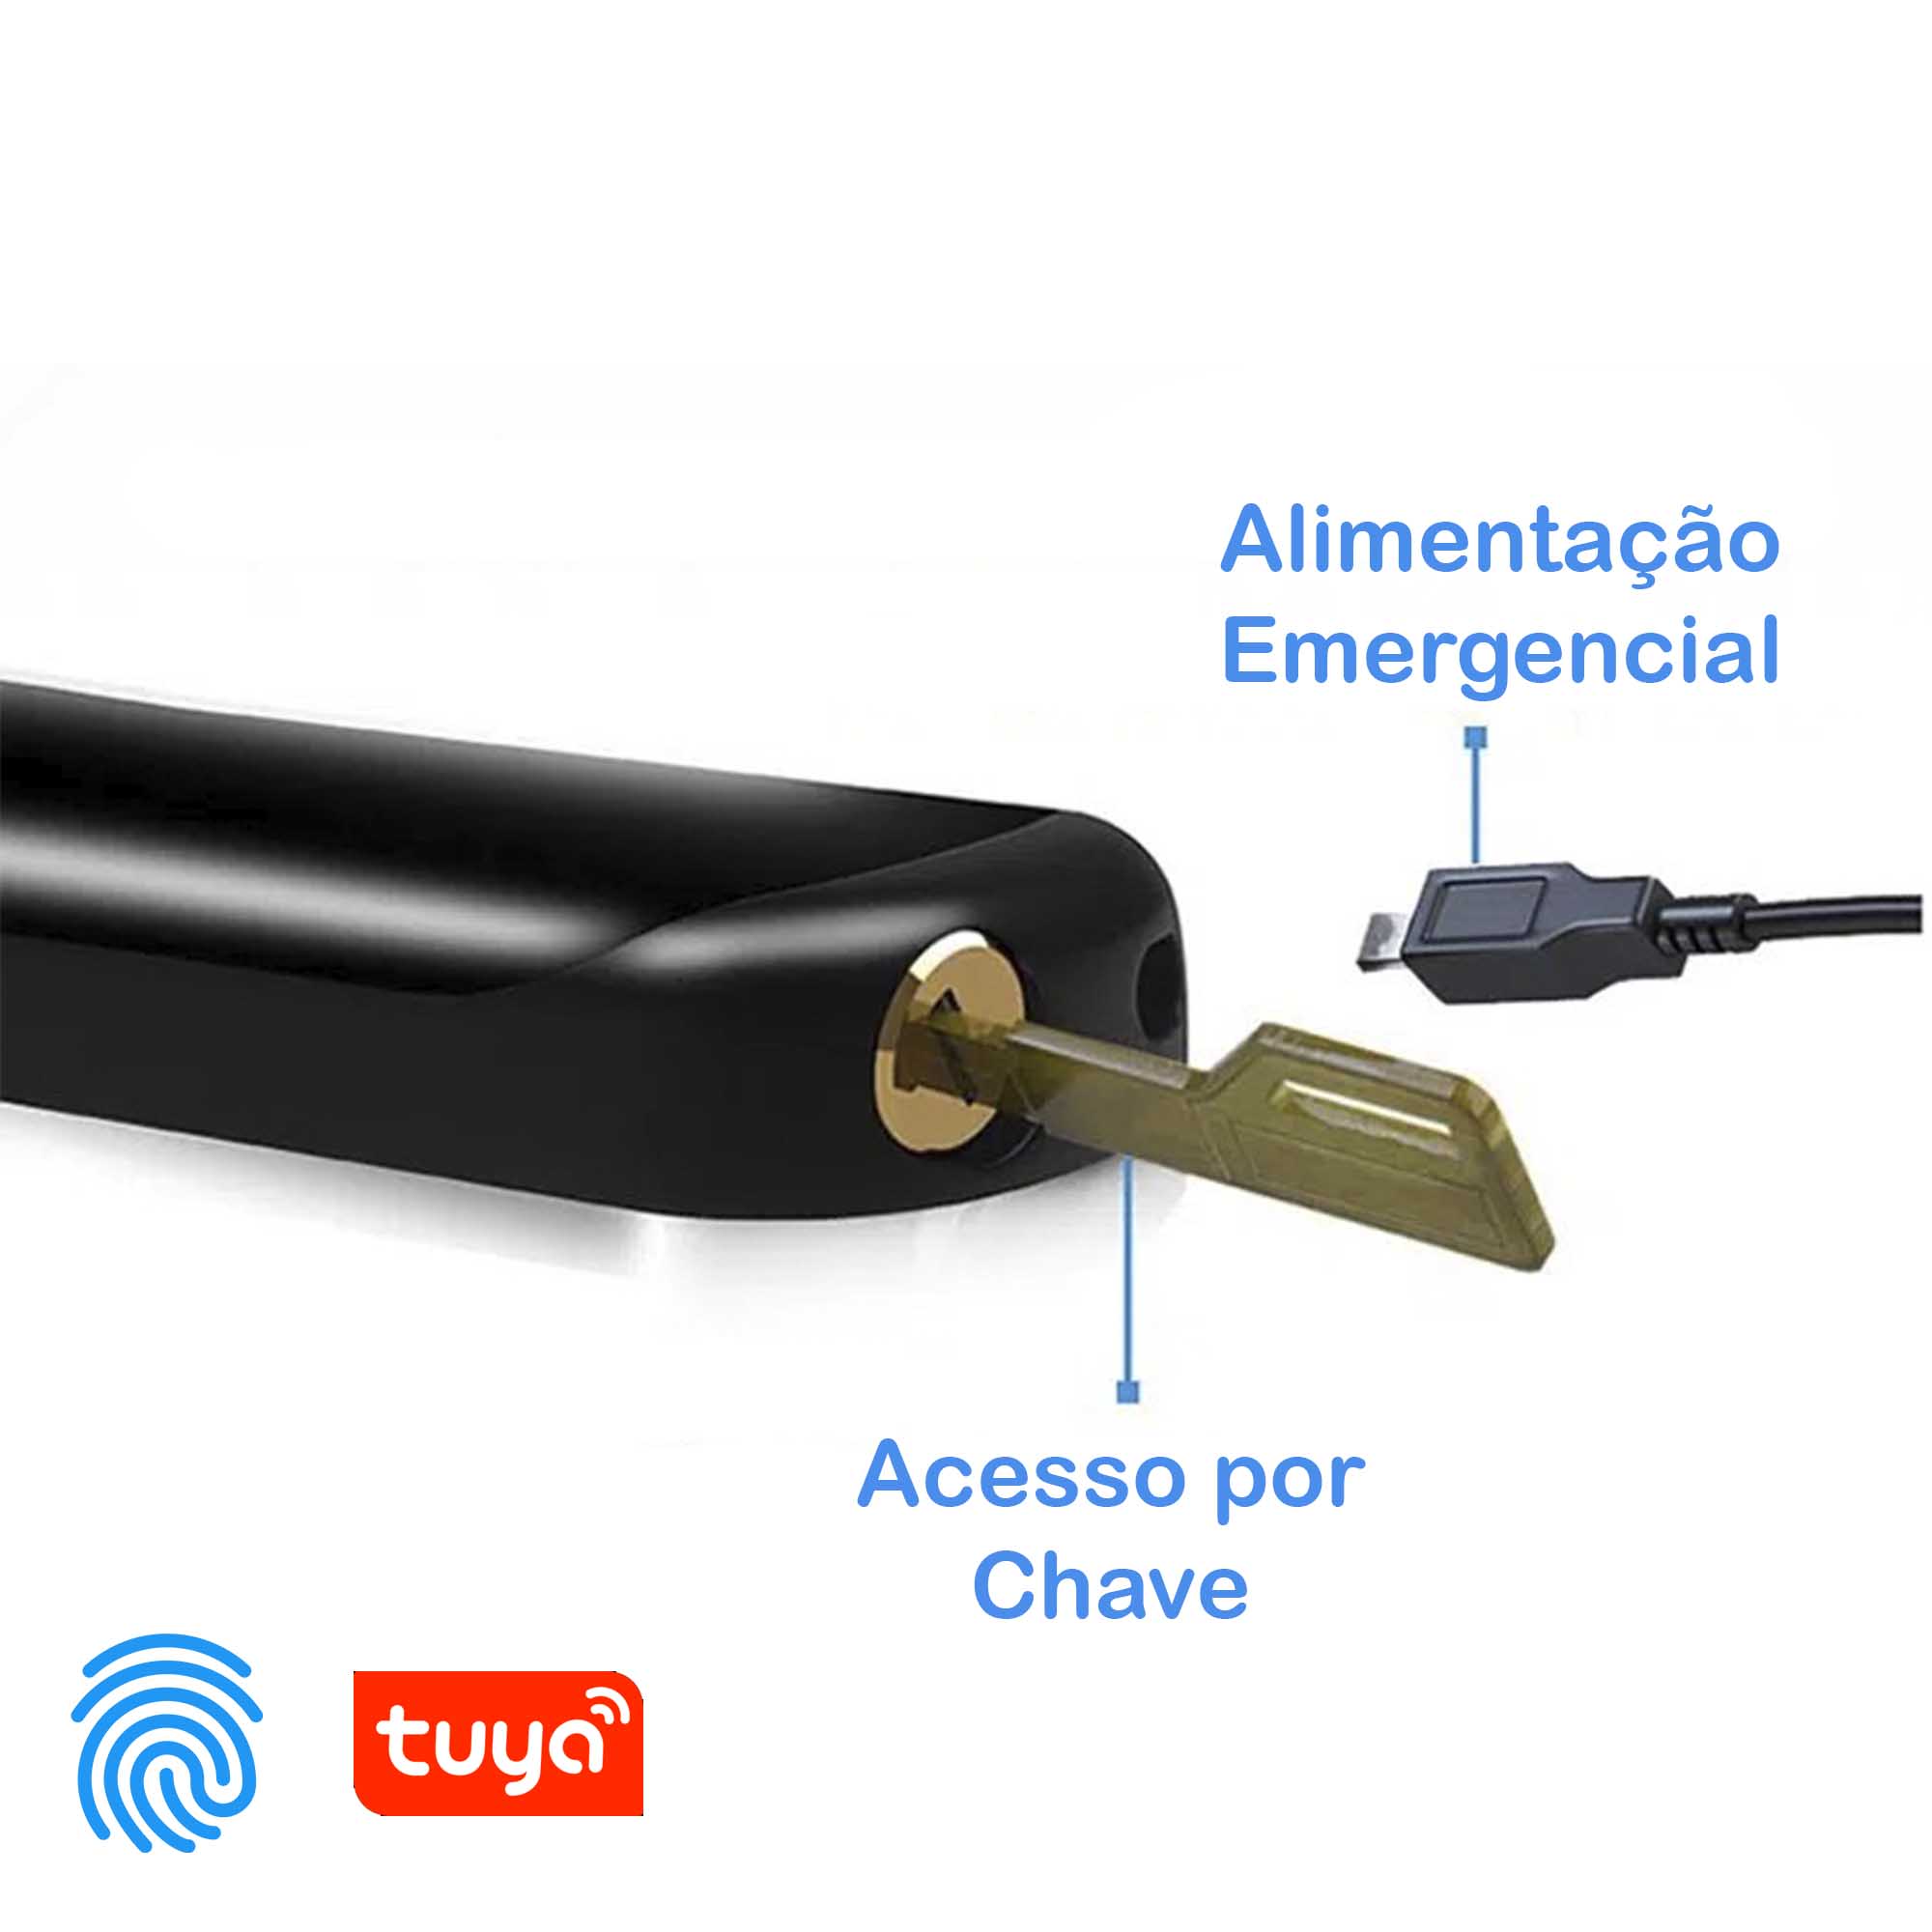 ilock01 - Fechadura Biométrica com acesso remoto - Tuya